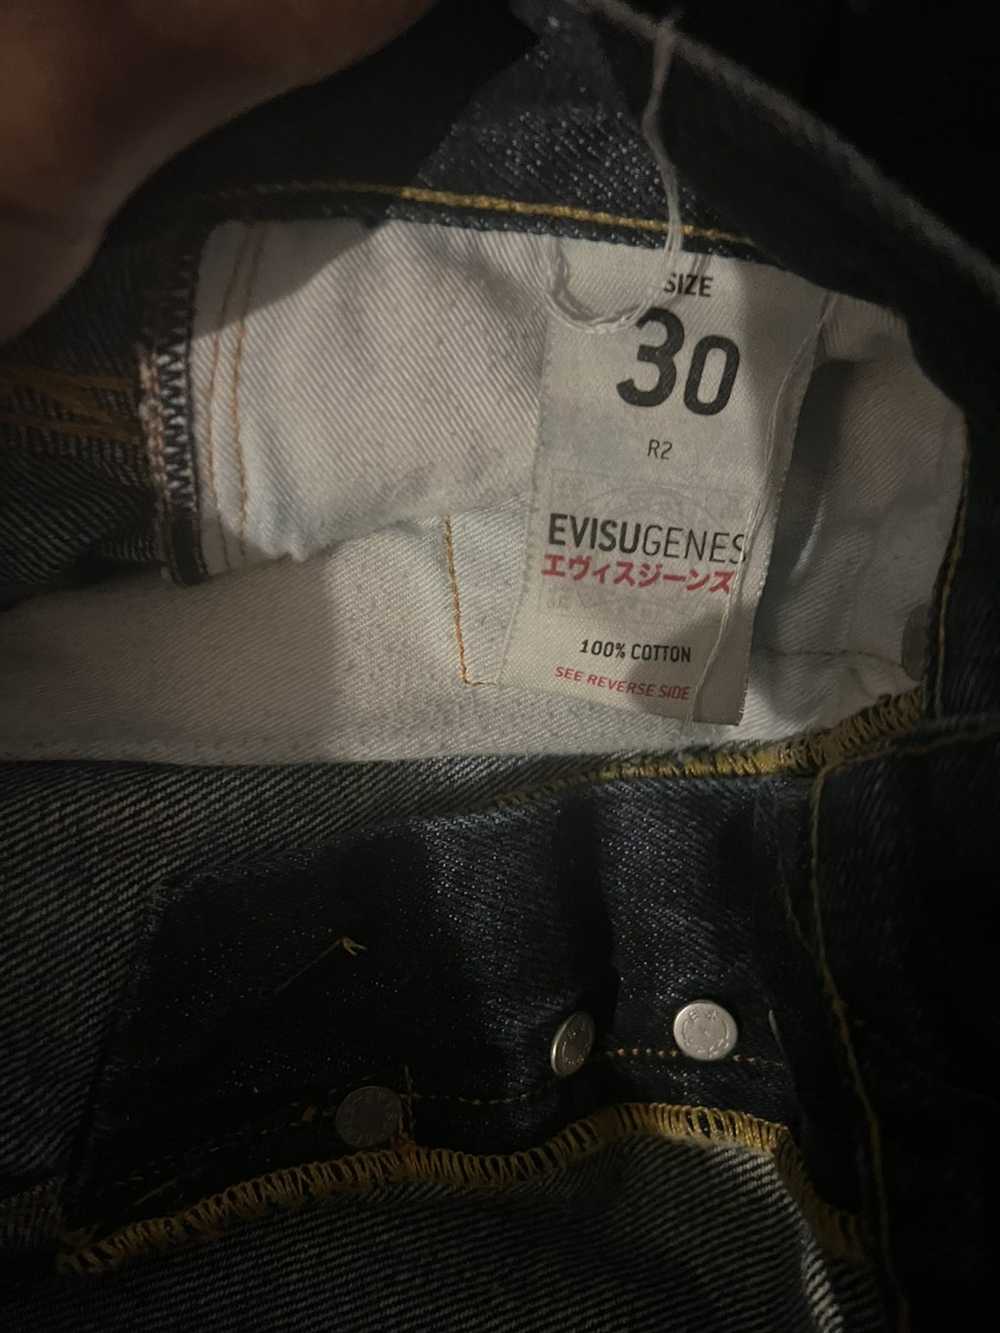 Evisu evisu jeans - image 3